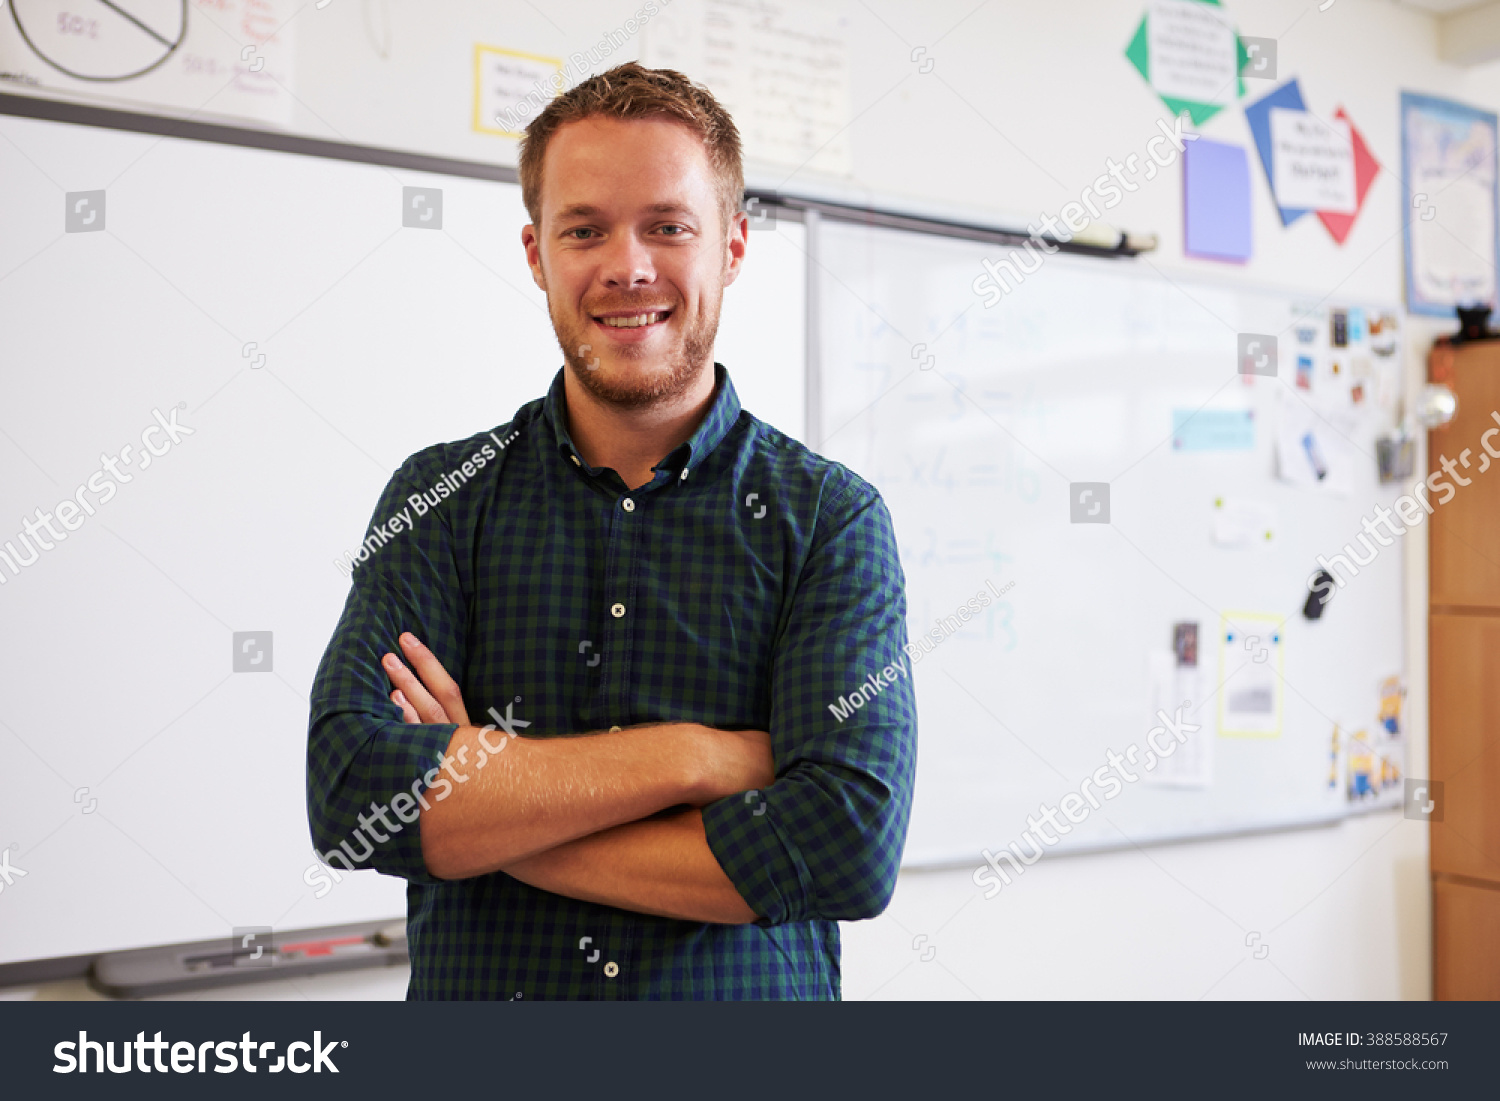 Portrait of confident Caucasian male teacher in classroom #388588567